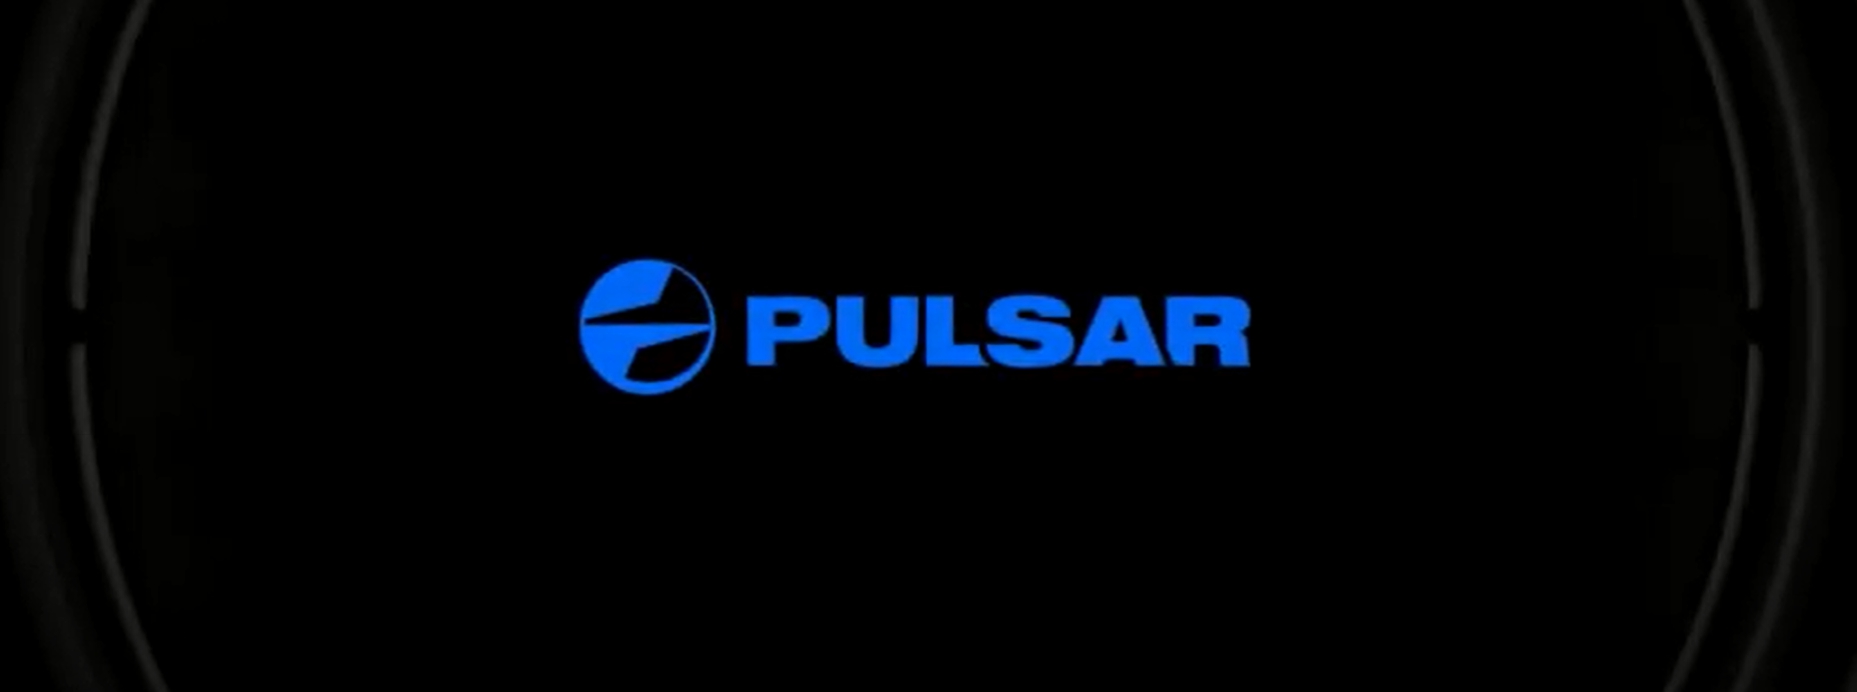 Pulsar Digex